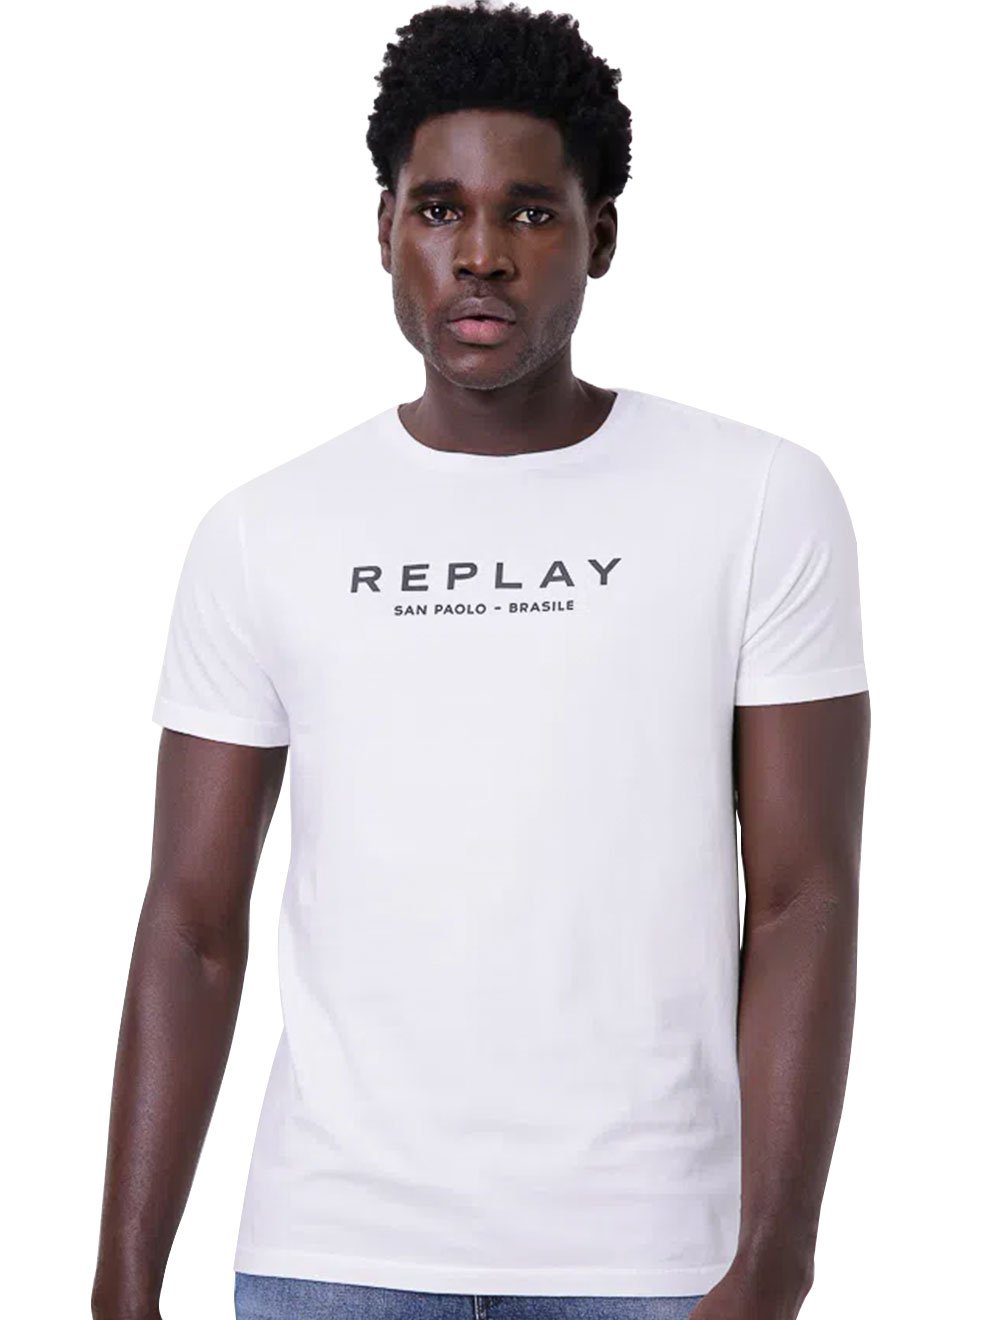 Camiseta Replay Masculina C-Neck San Paolo Brasile Branca